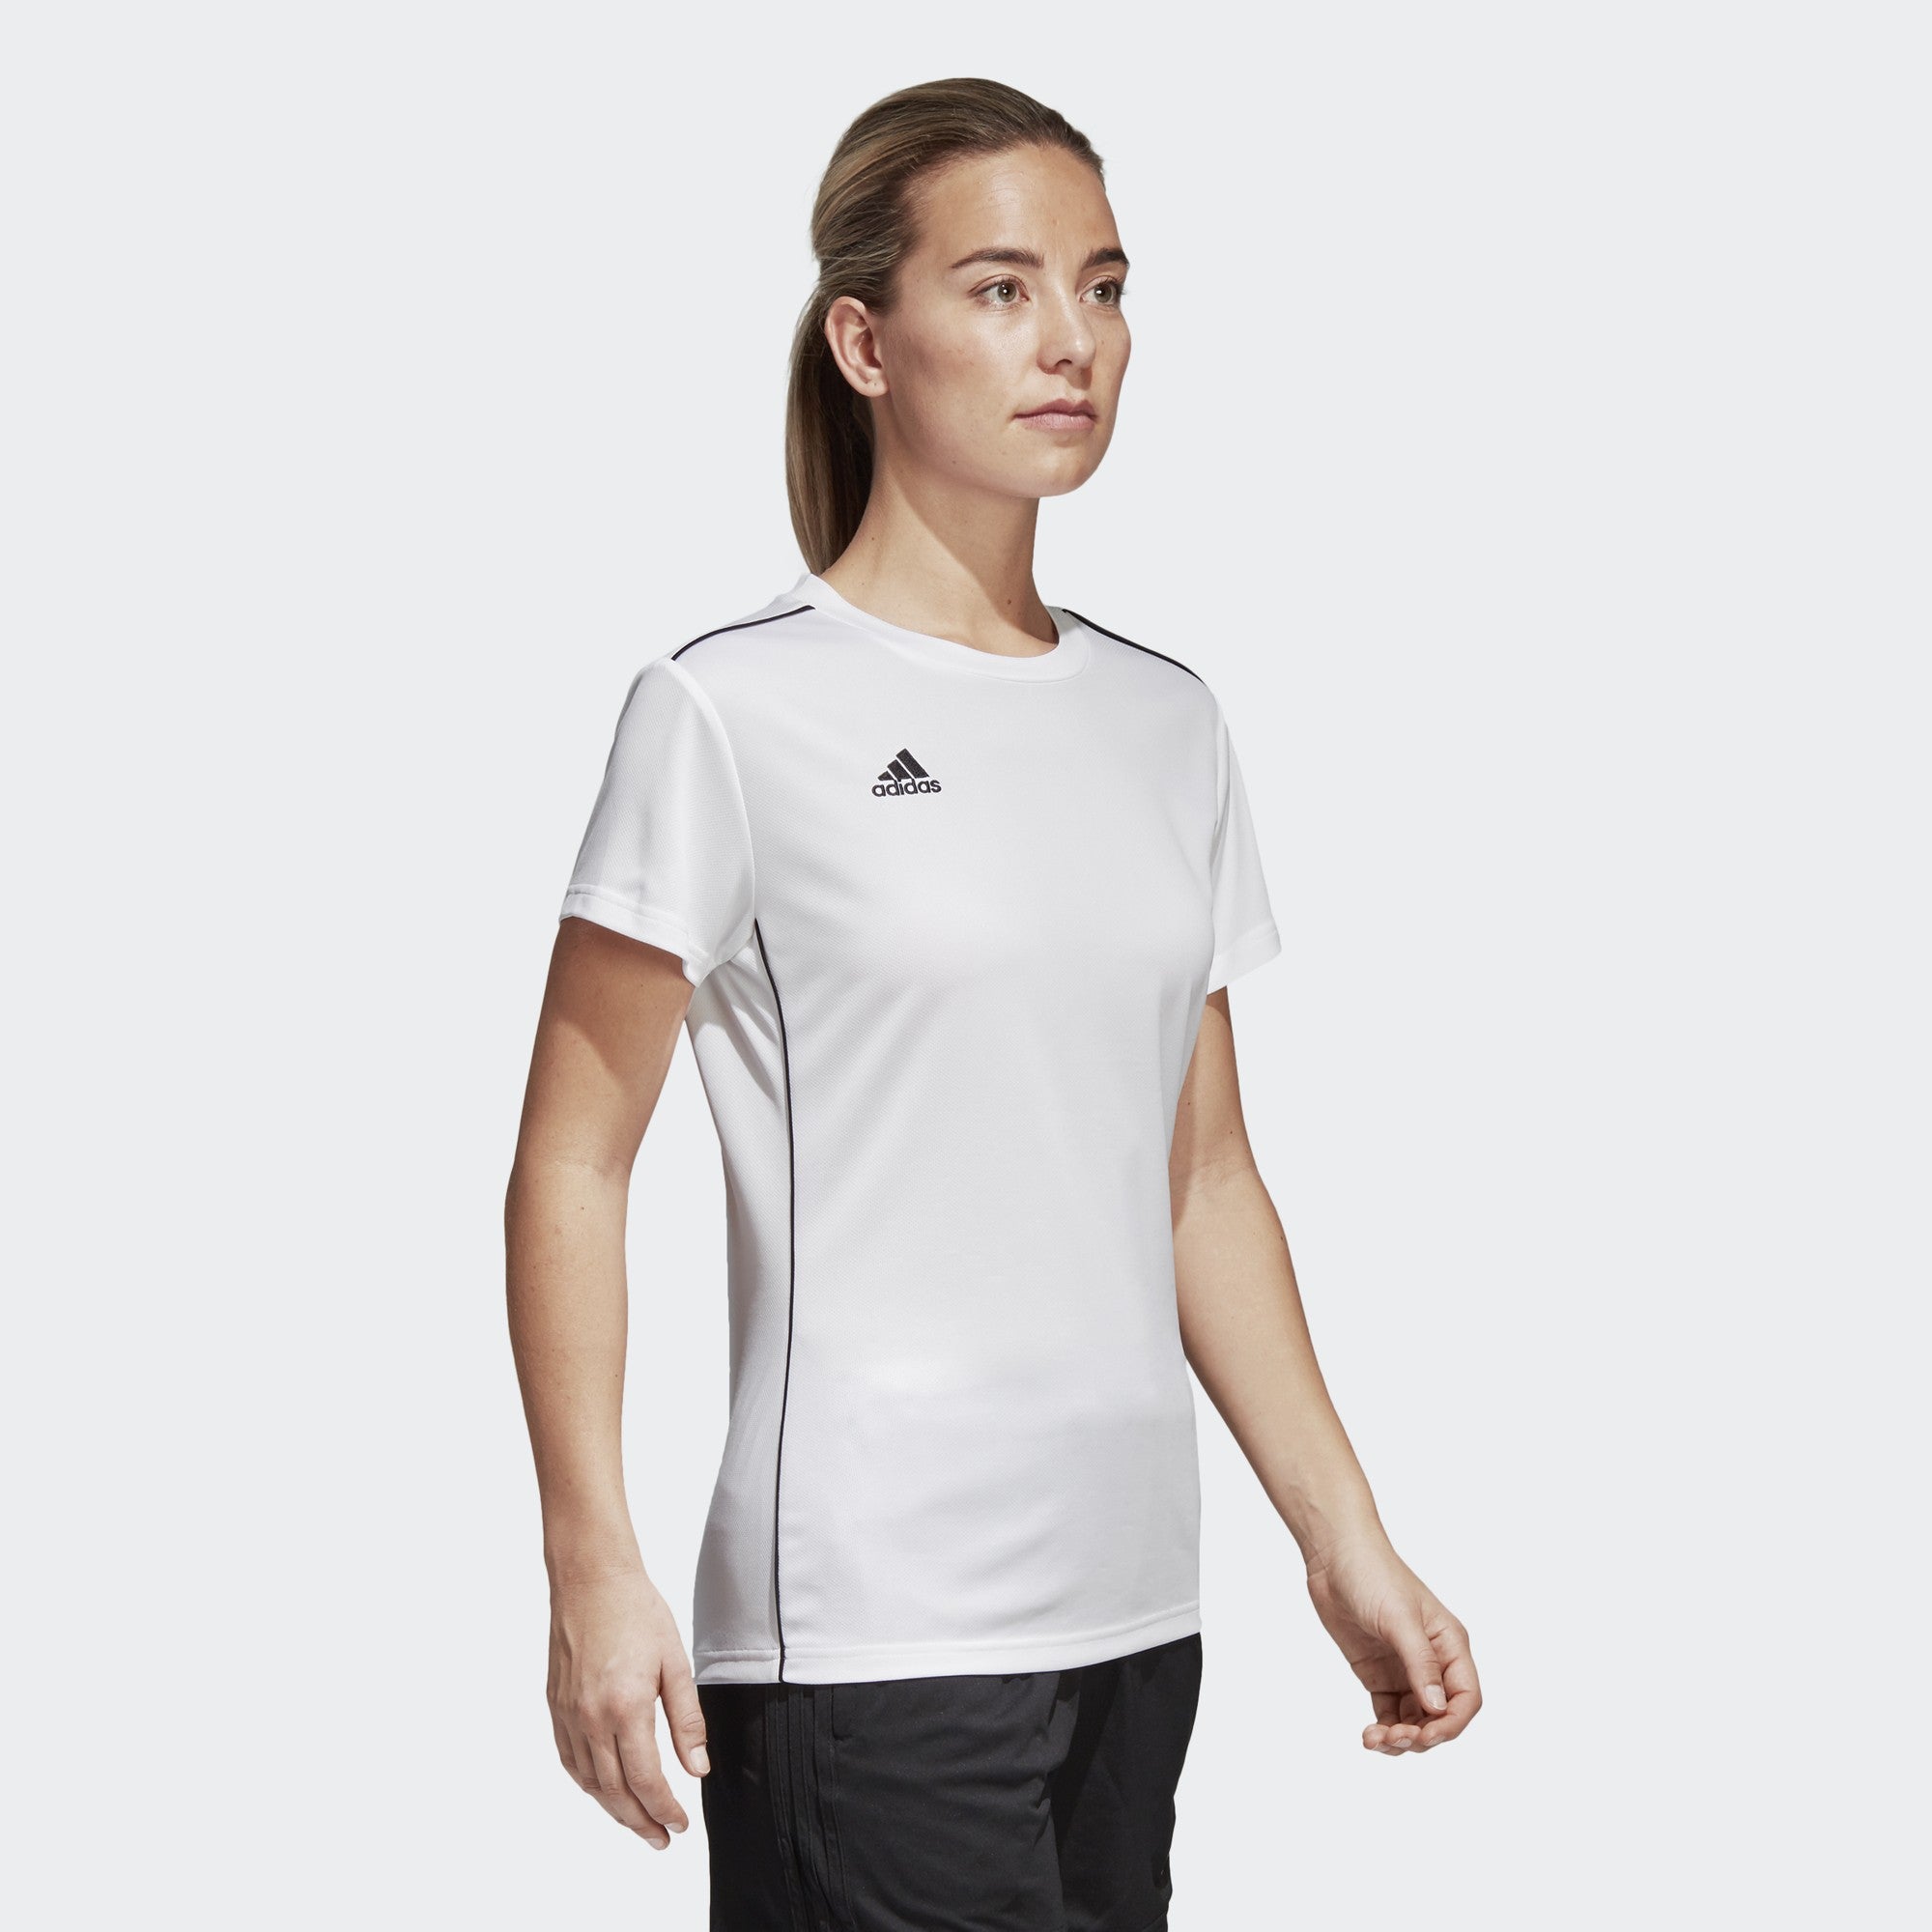 Women's Core 18 Jersey - White/Black